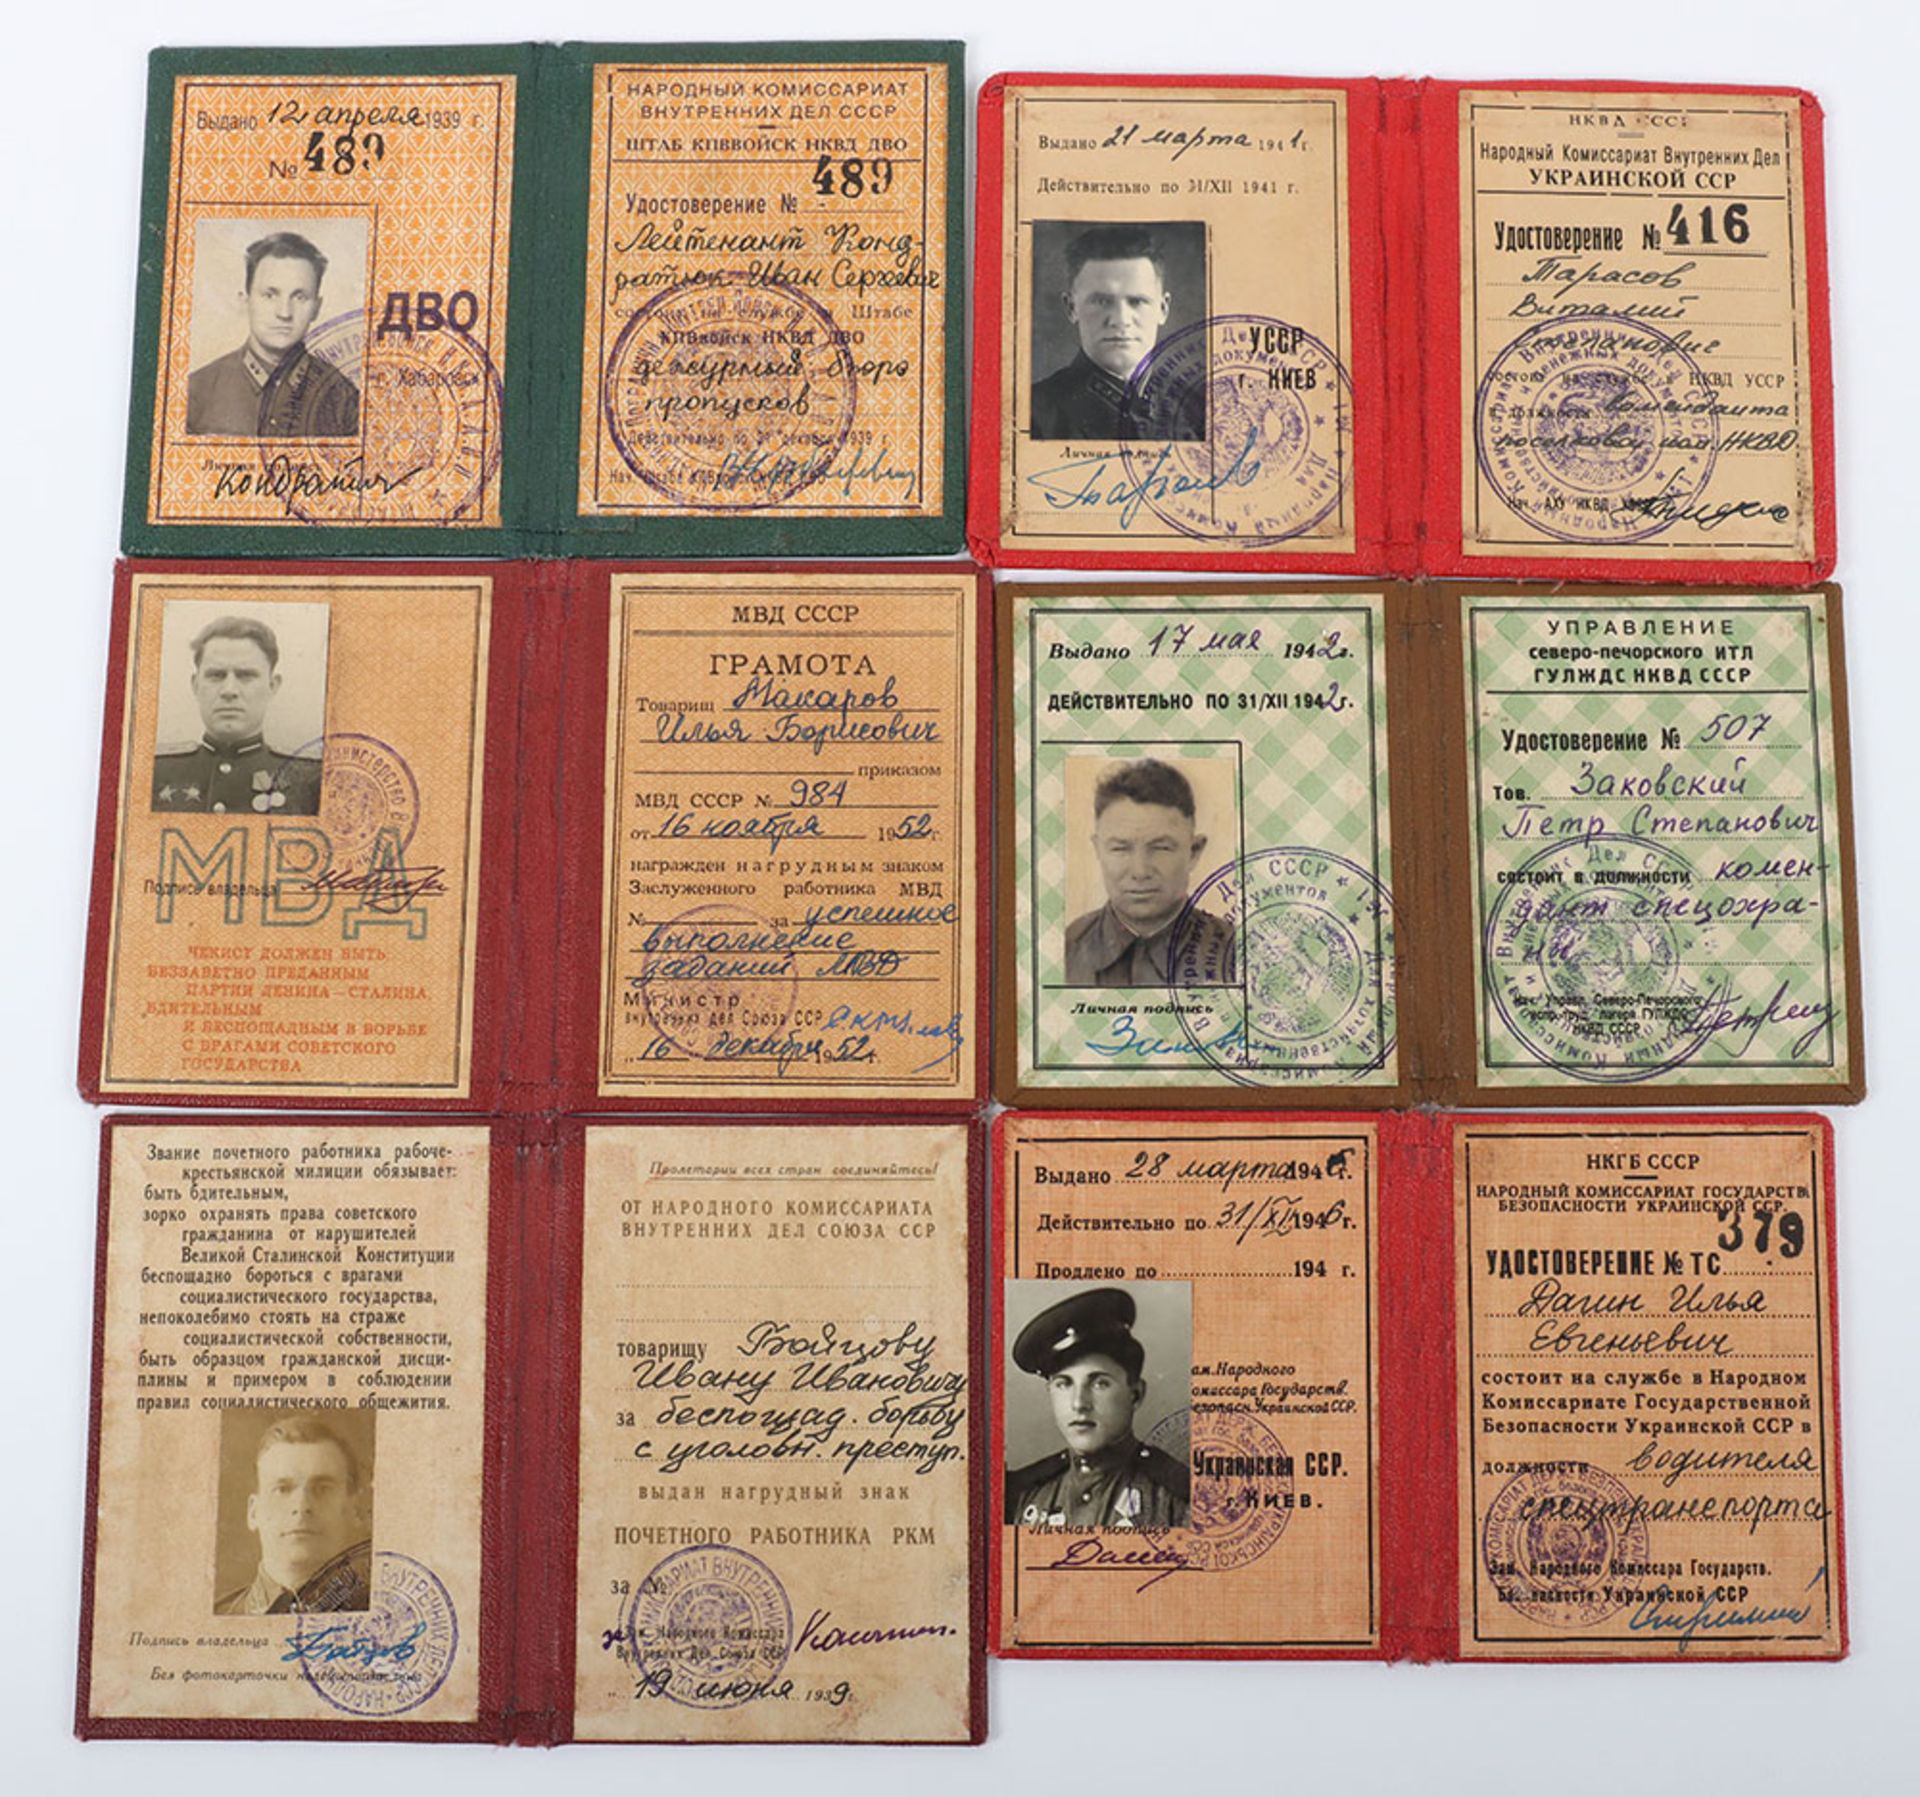 NKVD Identity books.